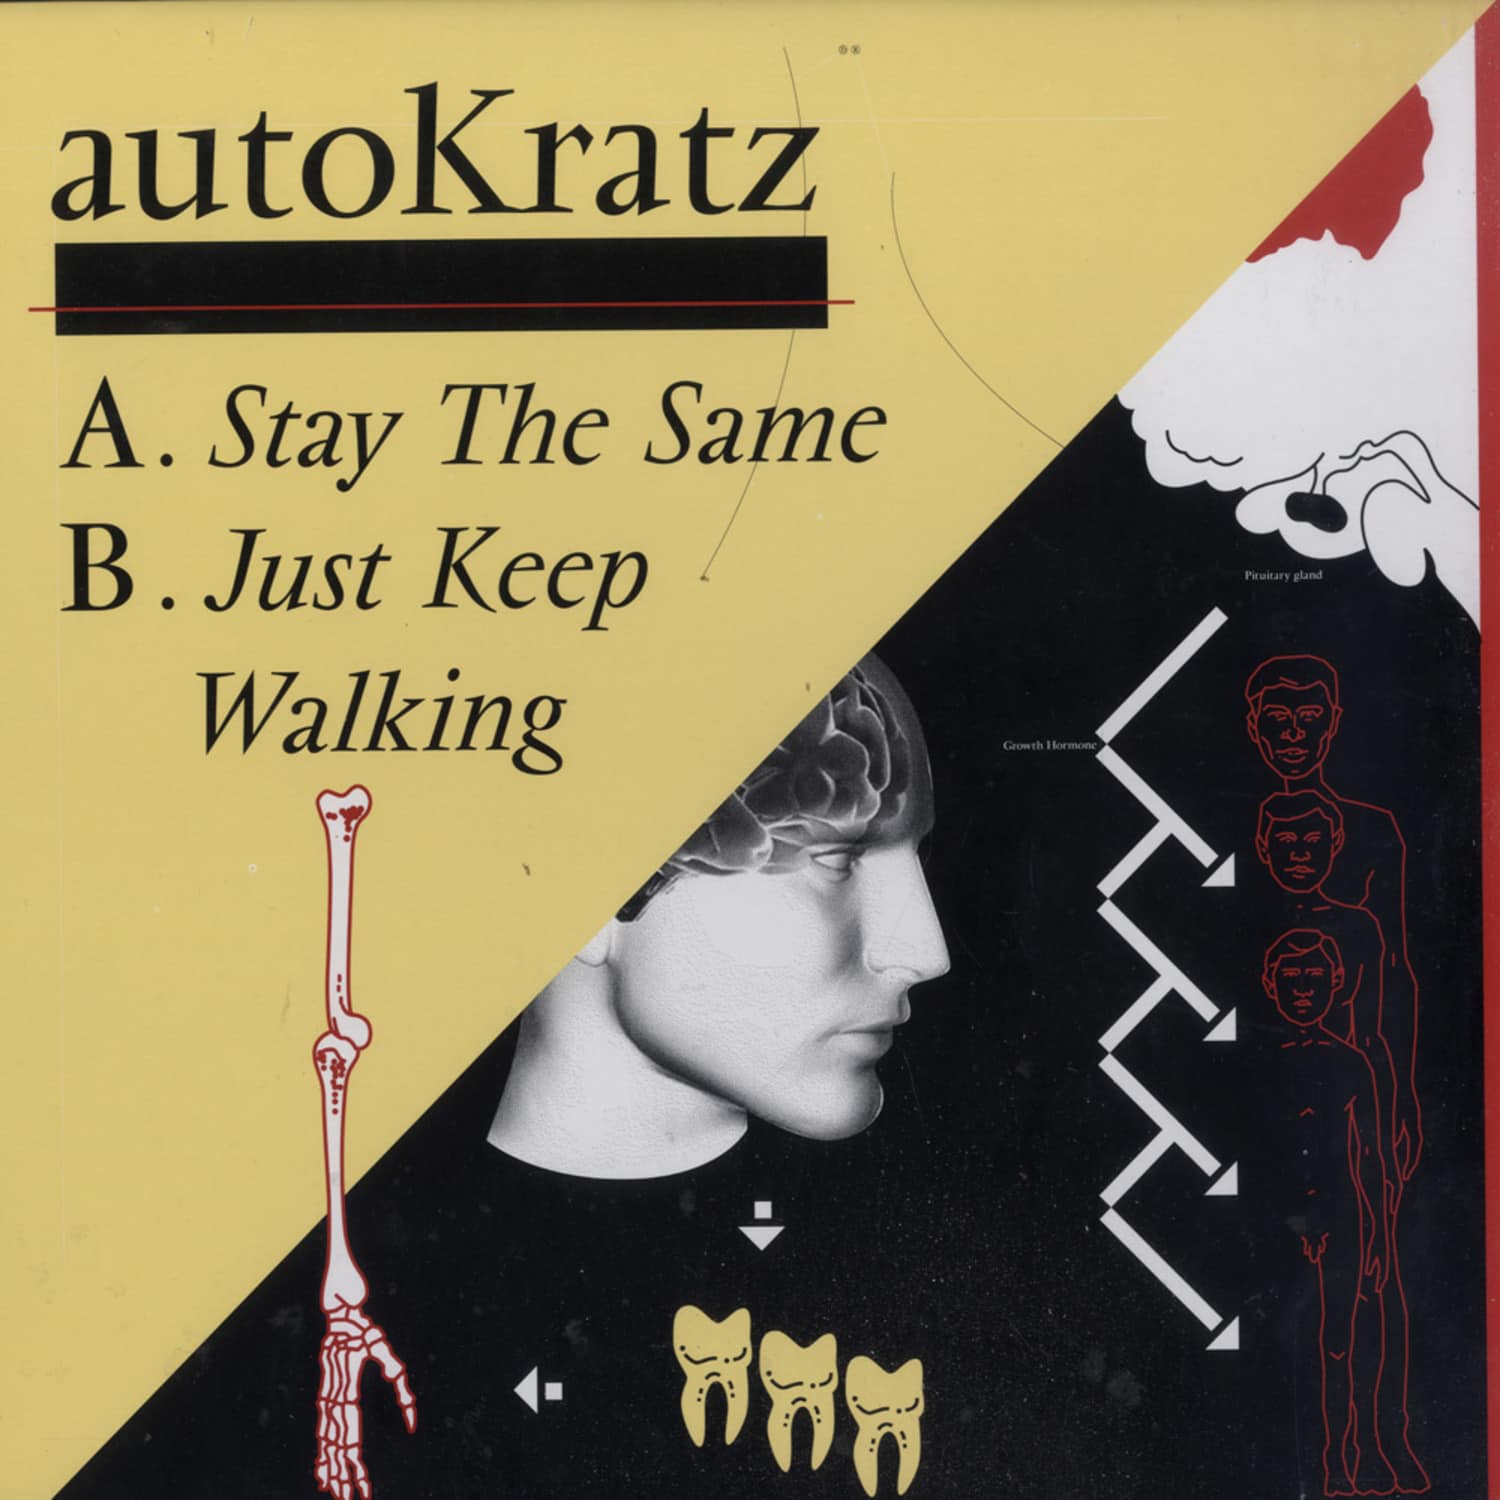 Autokratz - STAY THE SAME / JUST KEEP WALKING